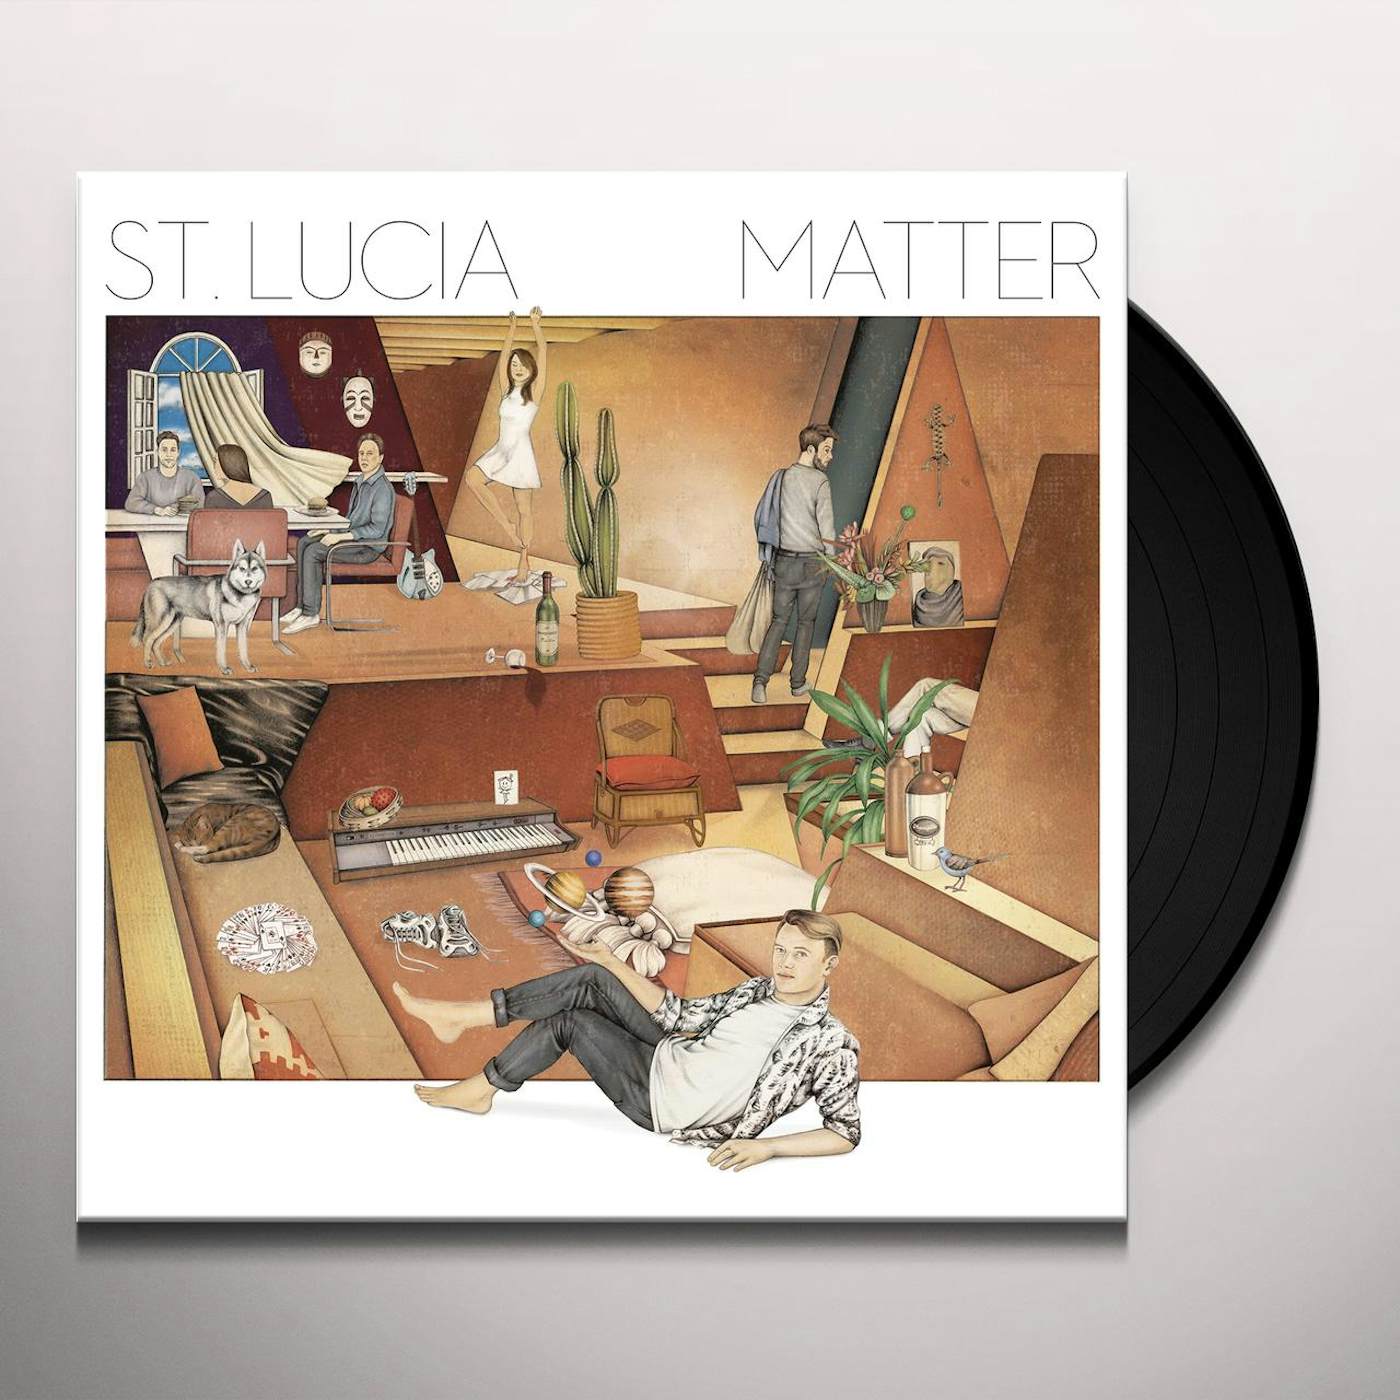 St. Lucia Matter Vinyl Record